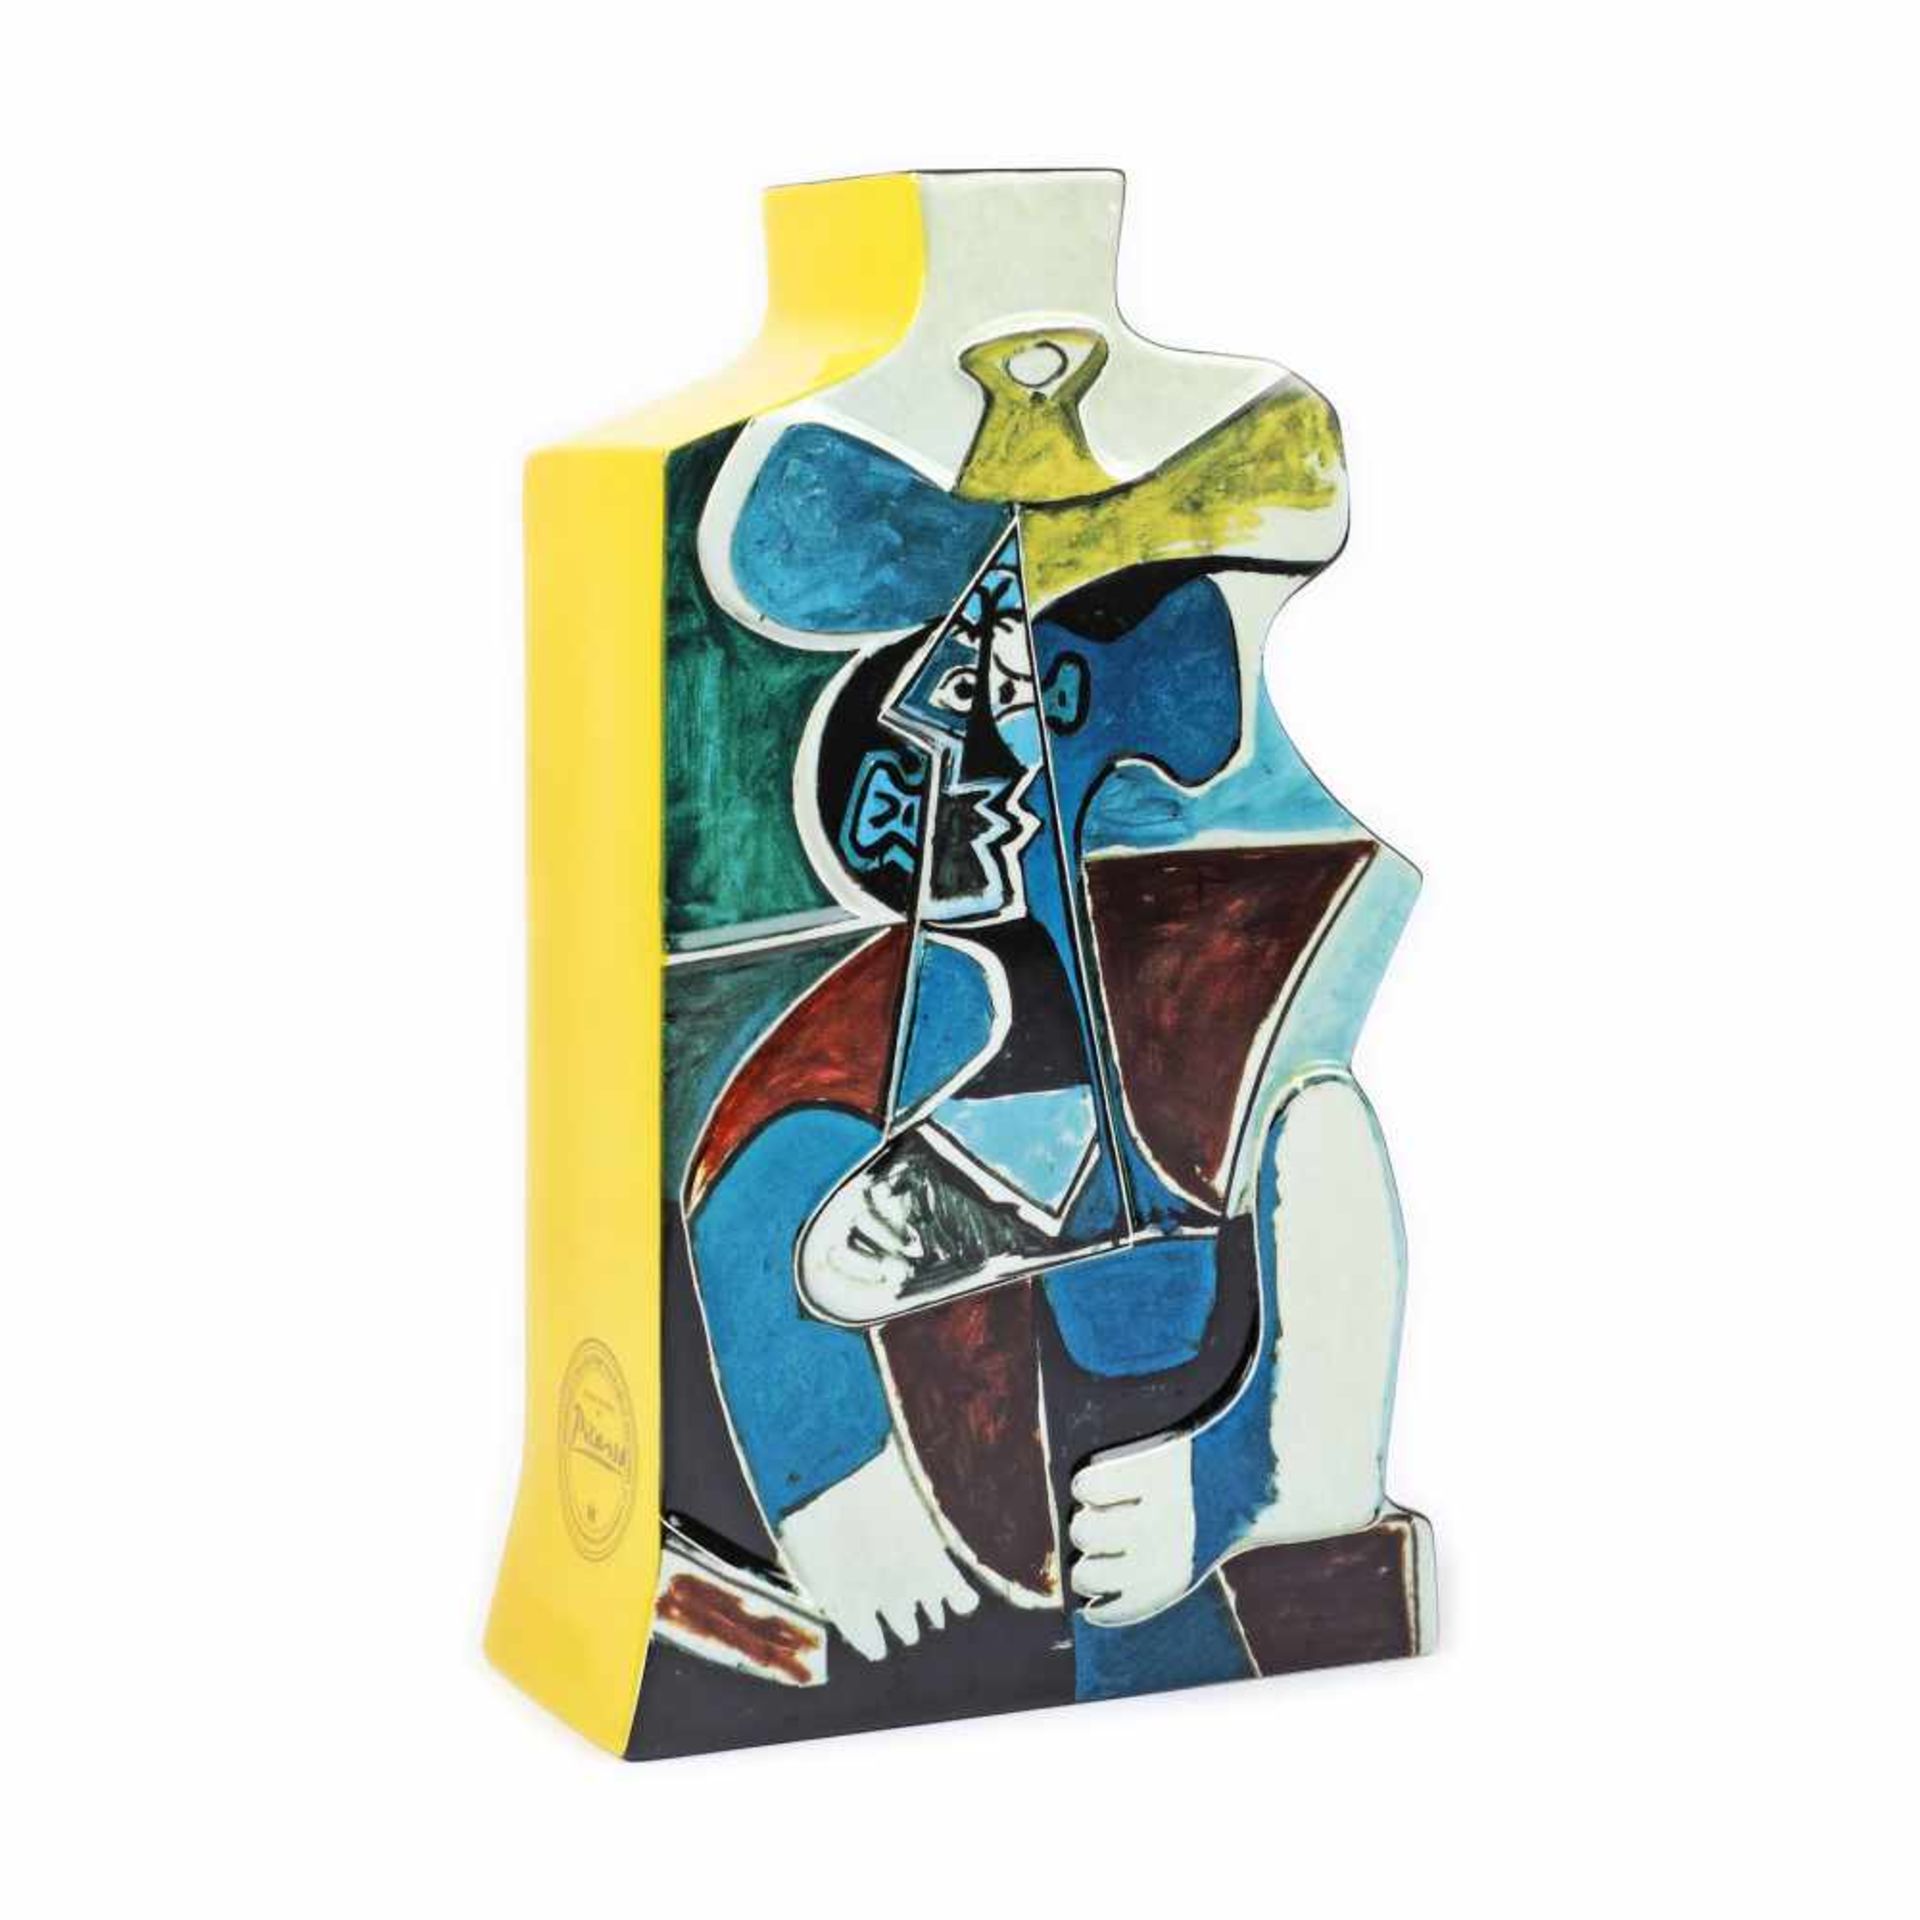 Porcelain Vase designed by Pablo Picasso